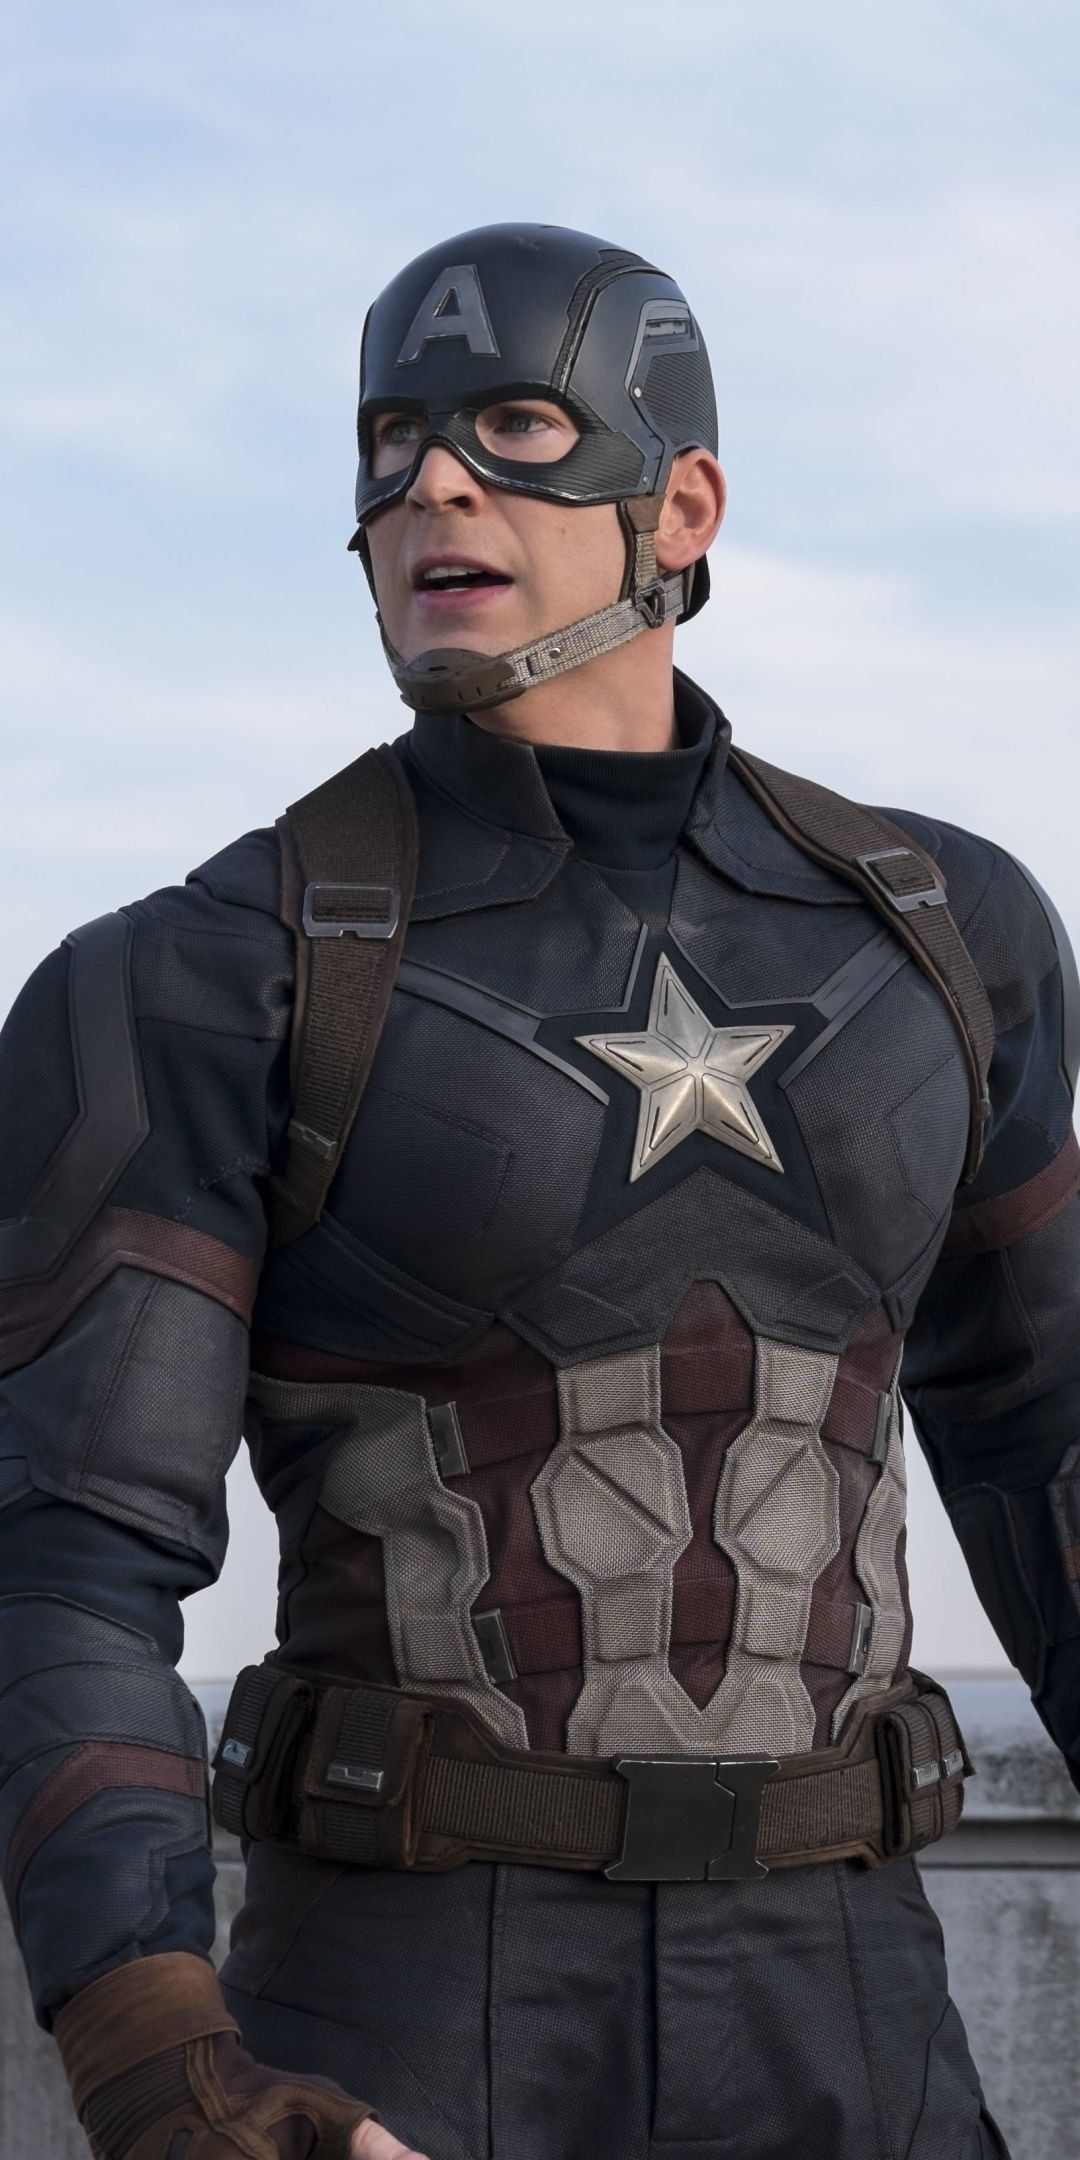 Captain America in the avengers. - Captain America